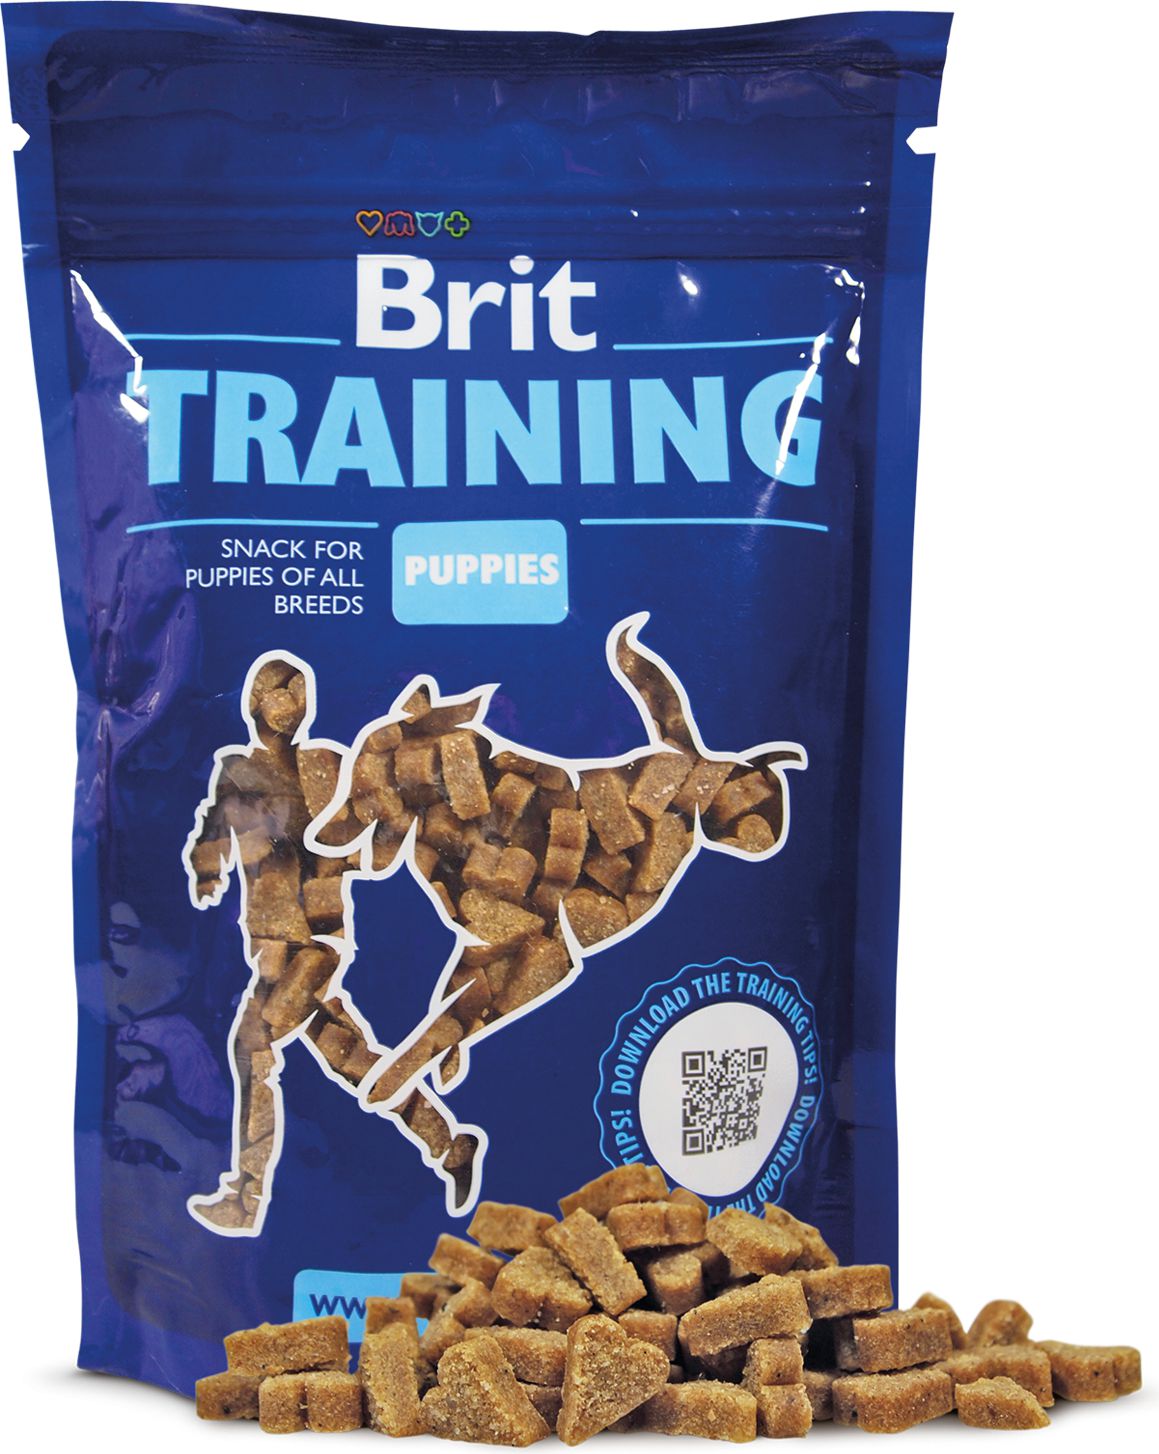 Brit Training Snack Puppies - 200g 009650 (8595602503353)